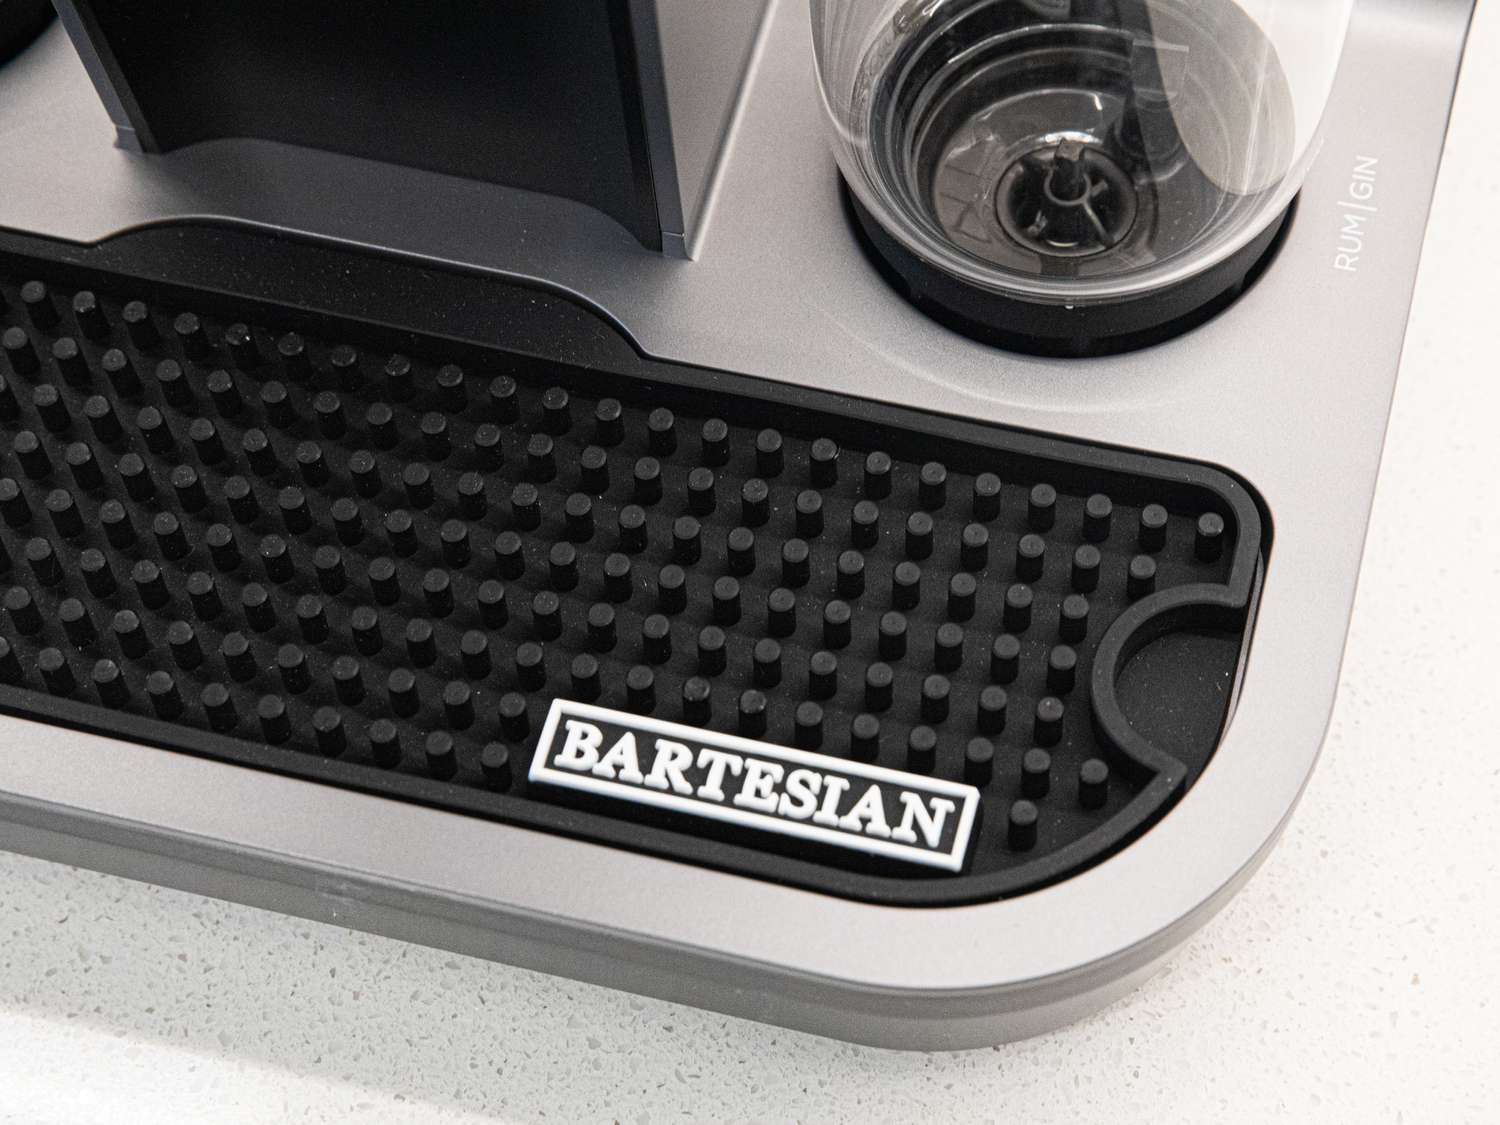 A closeup look at the rubber bar mat of the Bartesian